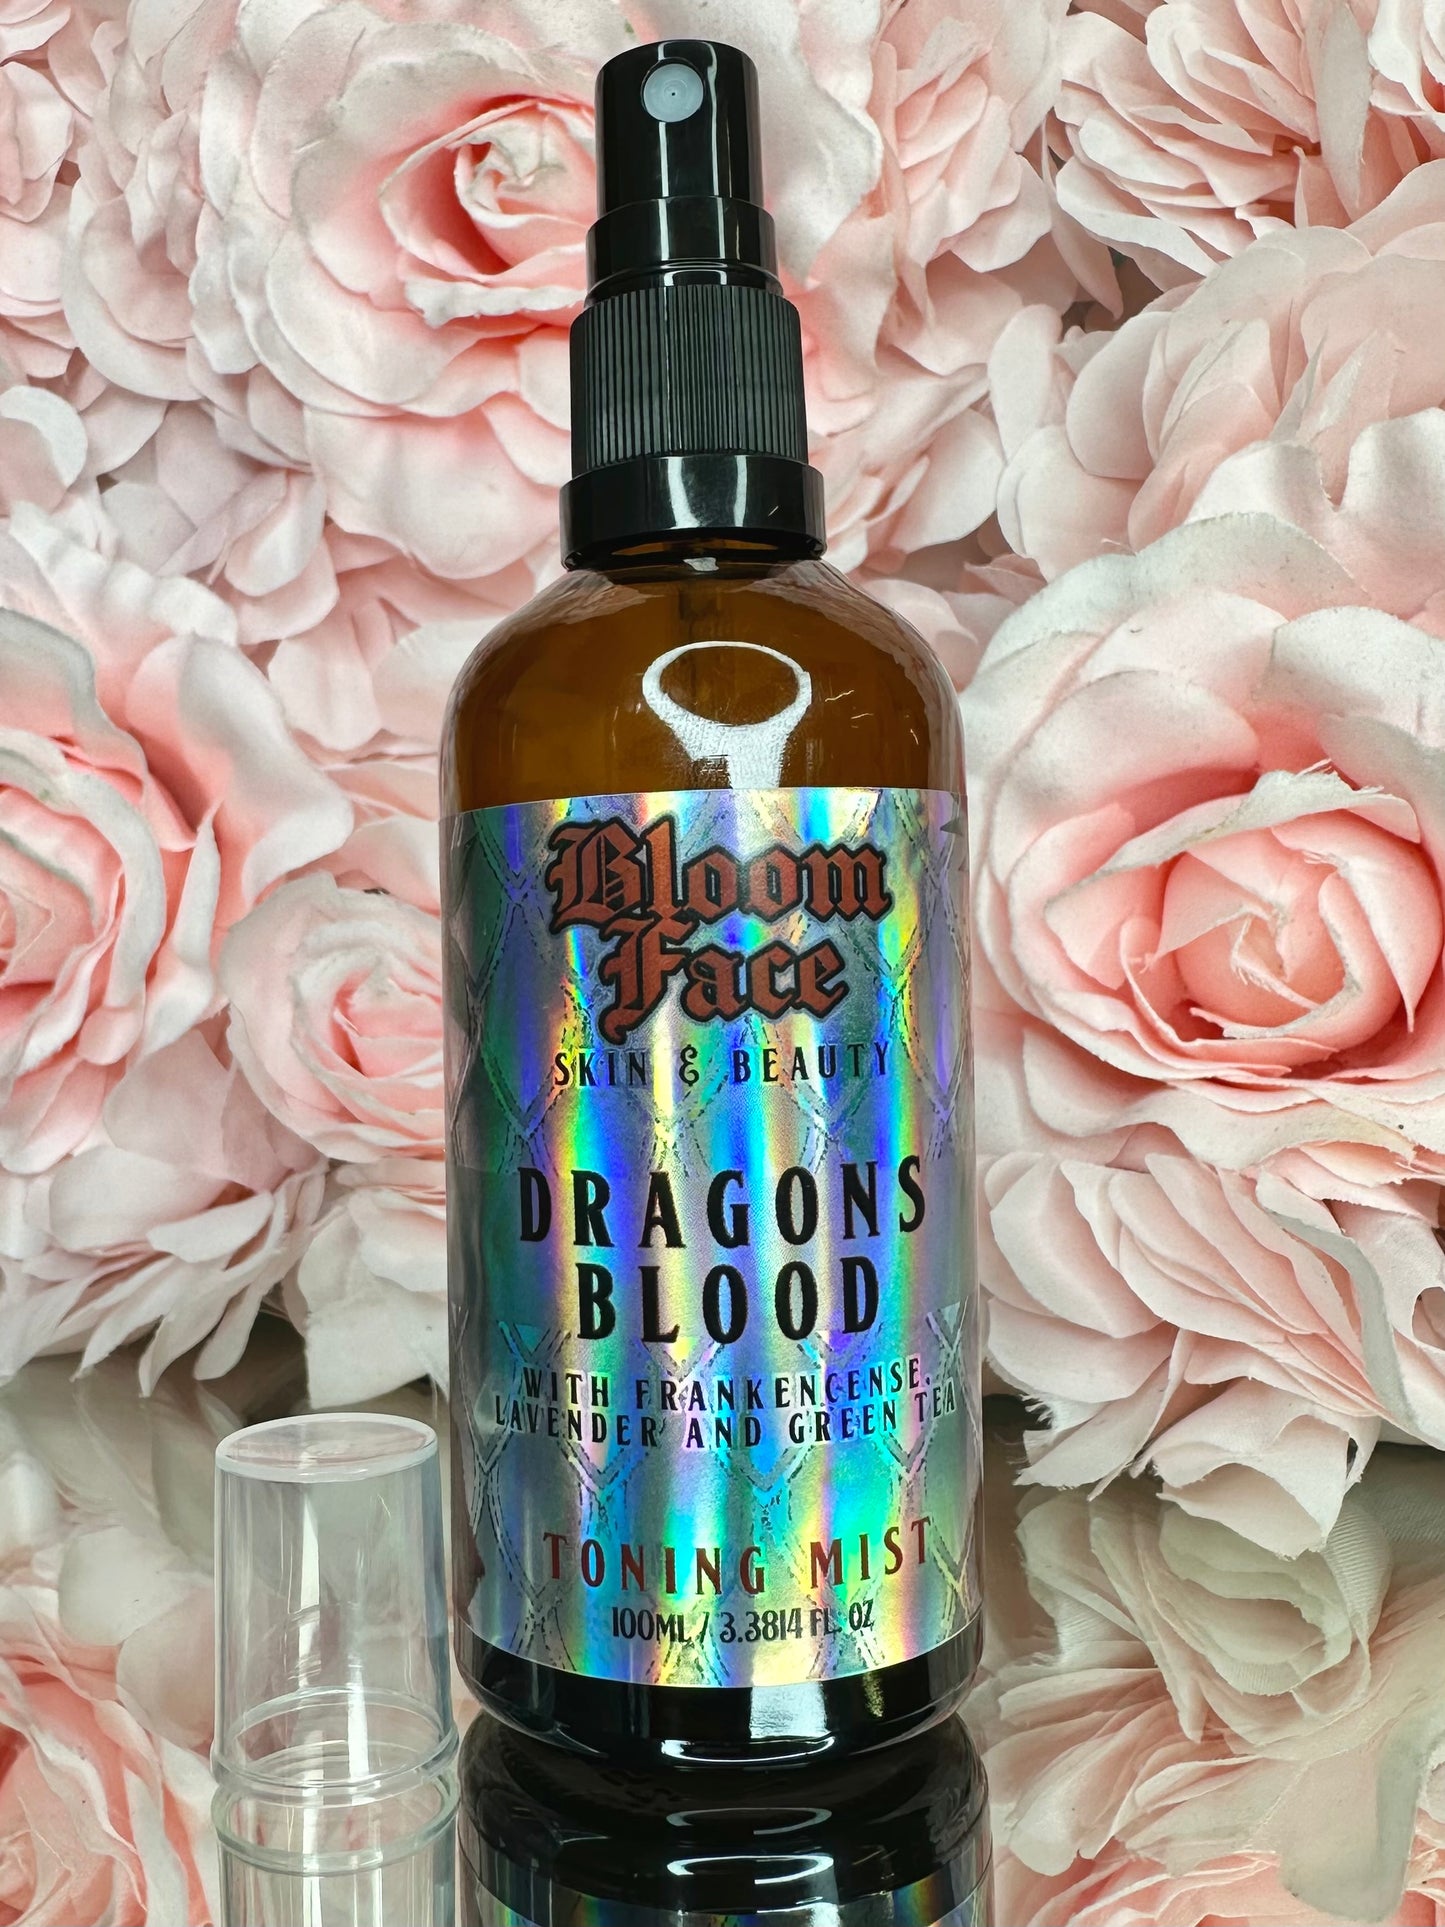 DRAGONS BLOOD - Toning Mist with Frankencense, Lavender and Green Tea